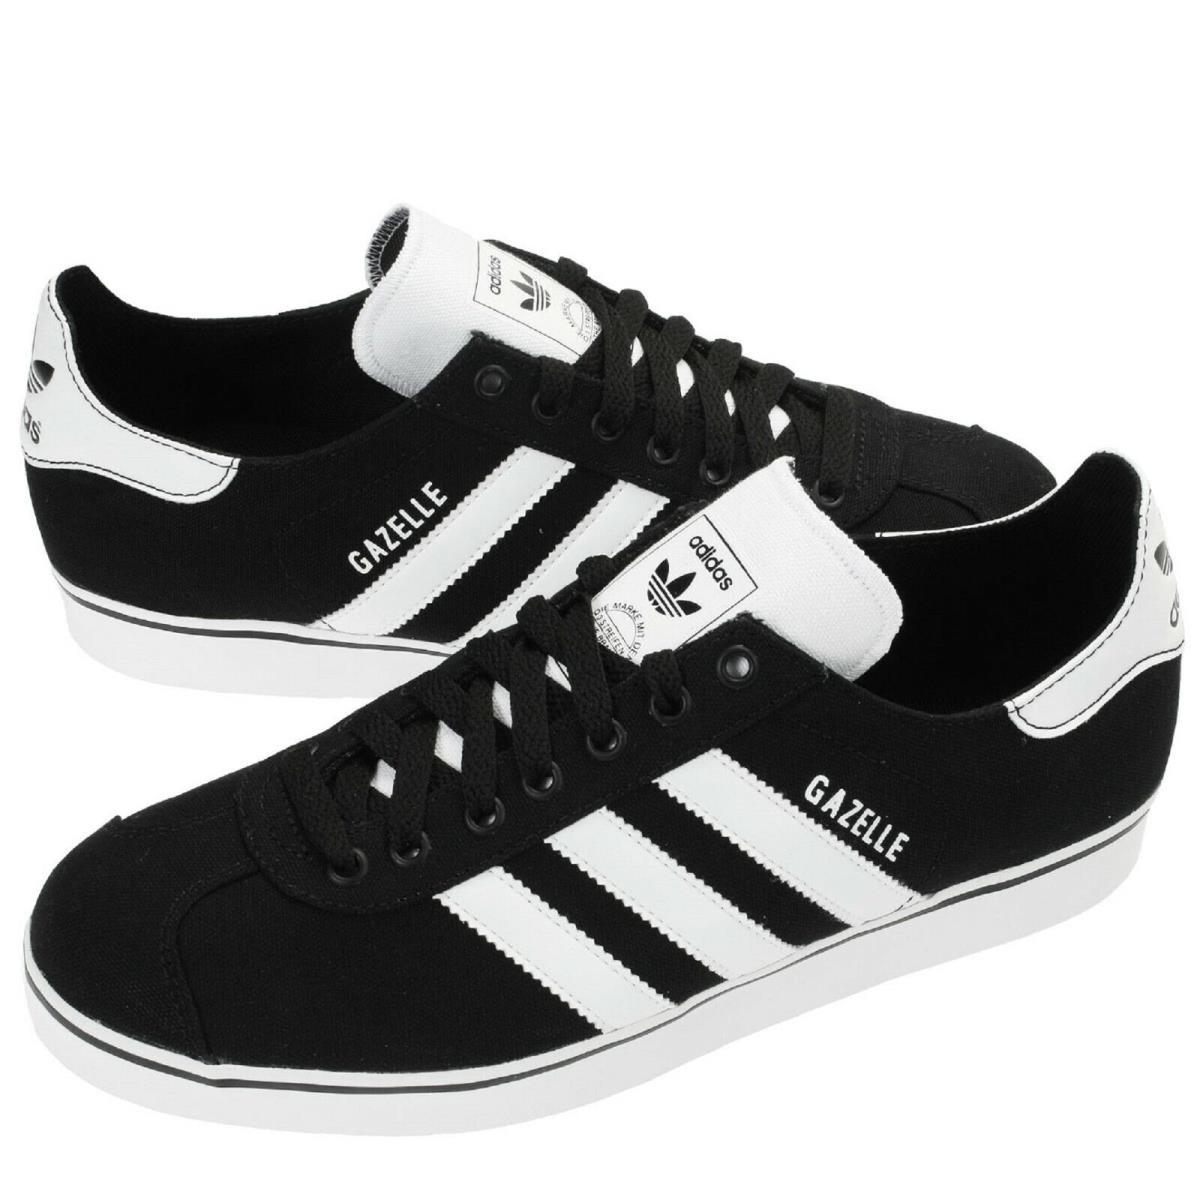 Adidas Men Gazelle Rst Shoes Black / White / Black G56007